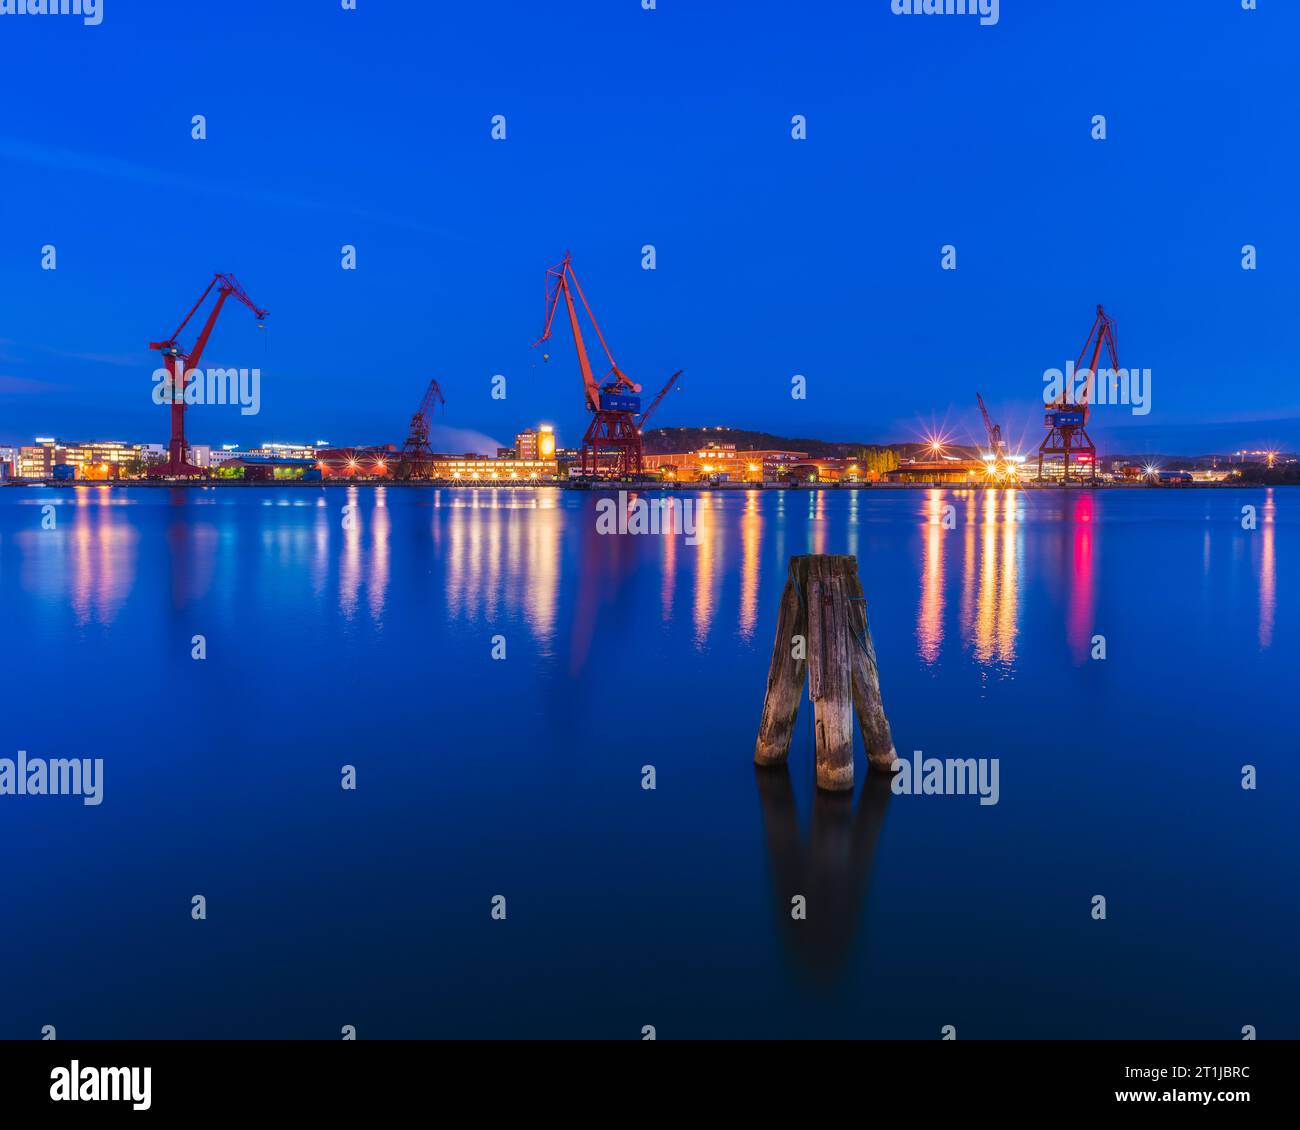 Blue evening sky over illuminated Gothenburg harbor with cranes and machinery. Stock Photo